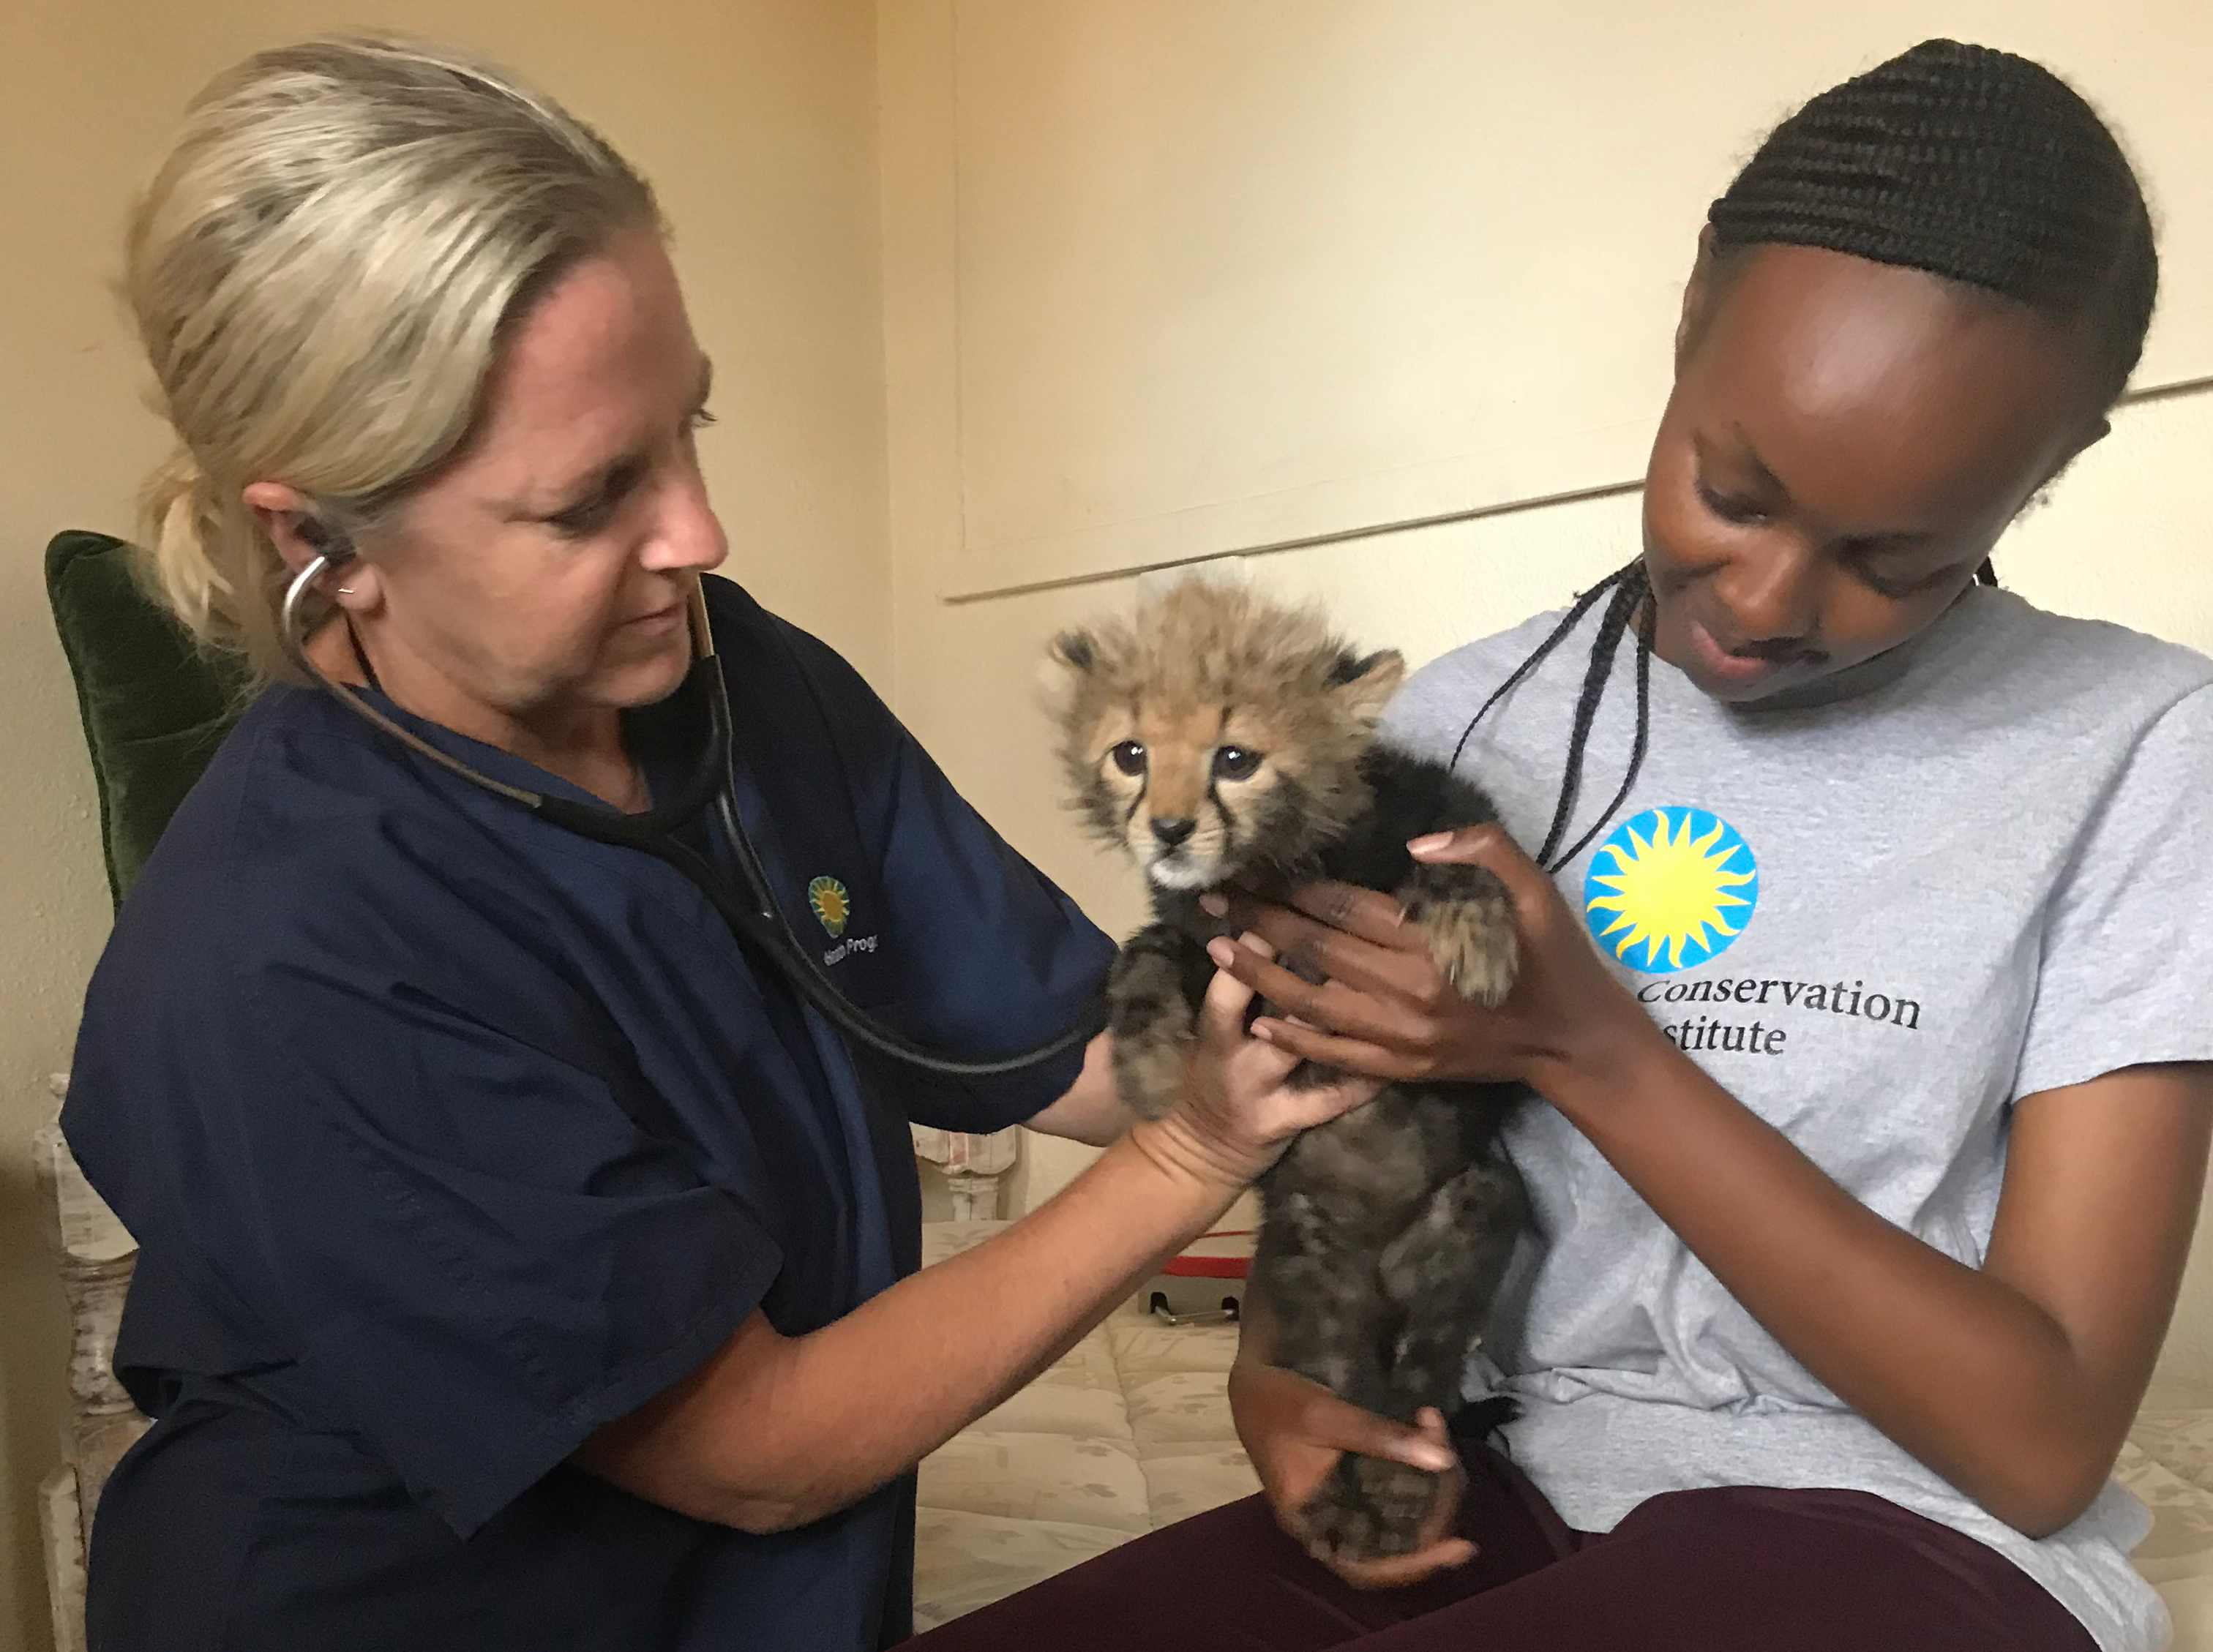 Two wildlife veterinarians with Global Health Program examine a cheetah cub in Kenya